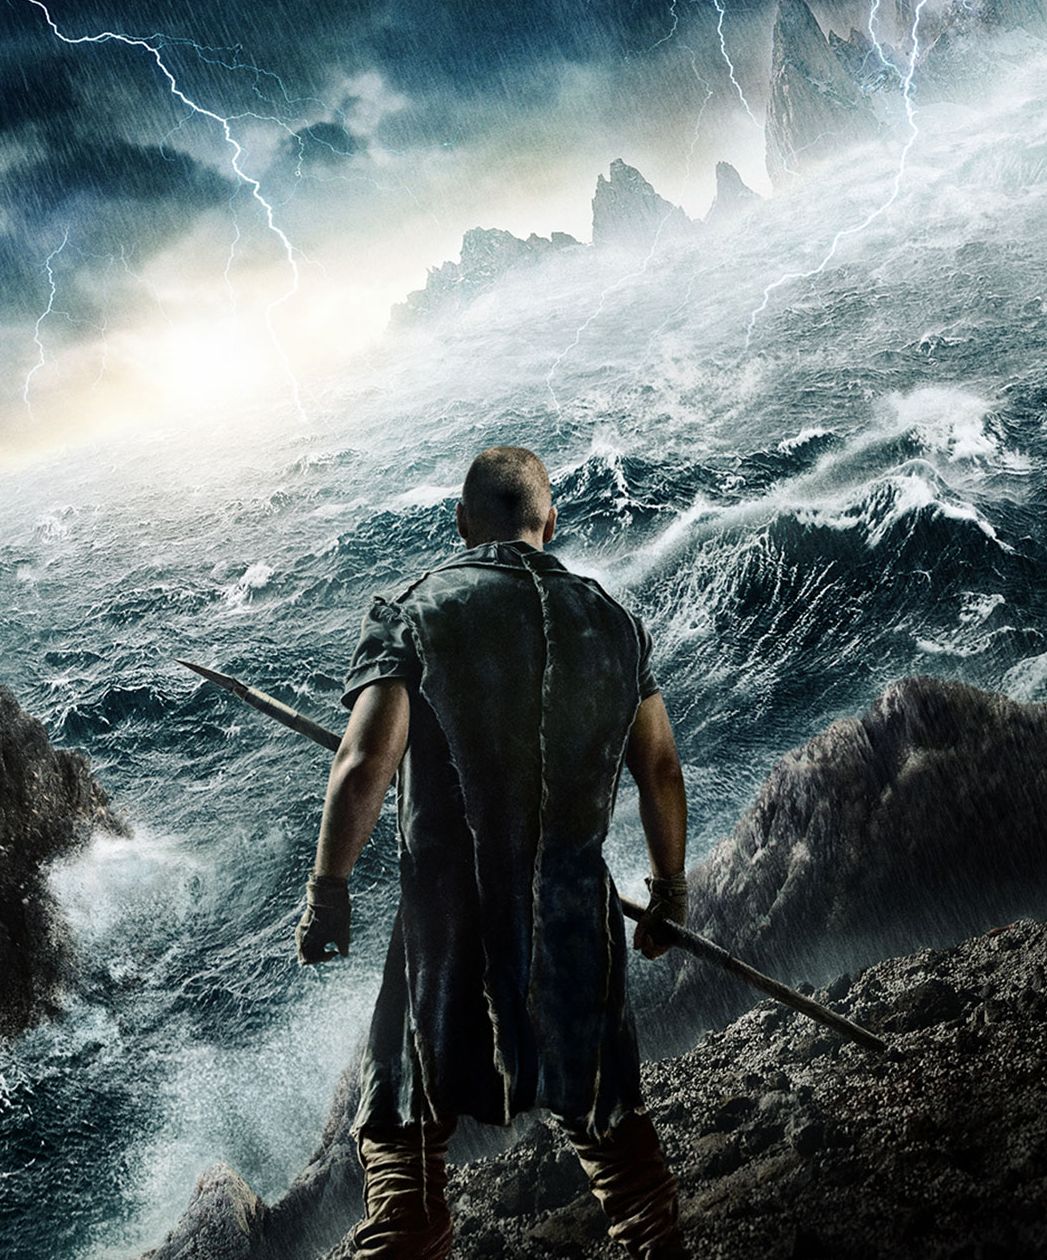 The apocalypse is coming in Noah, poster art